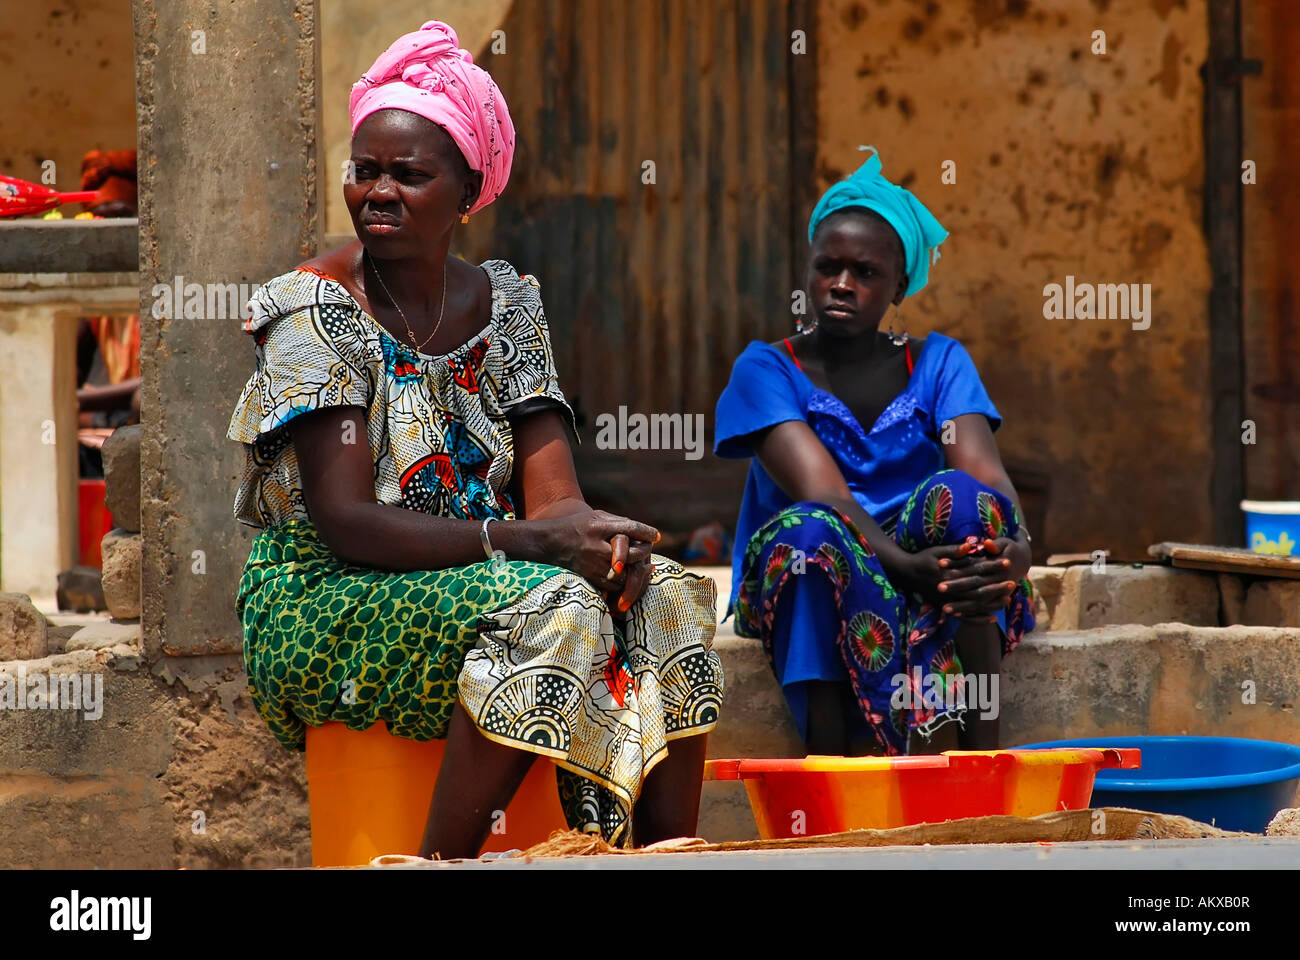 African Women Gambia Traditional Dress Stock Photos & African Women ...